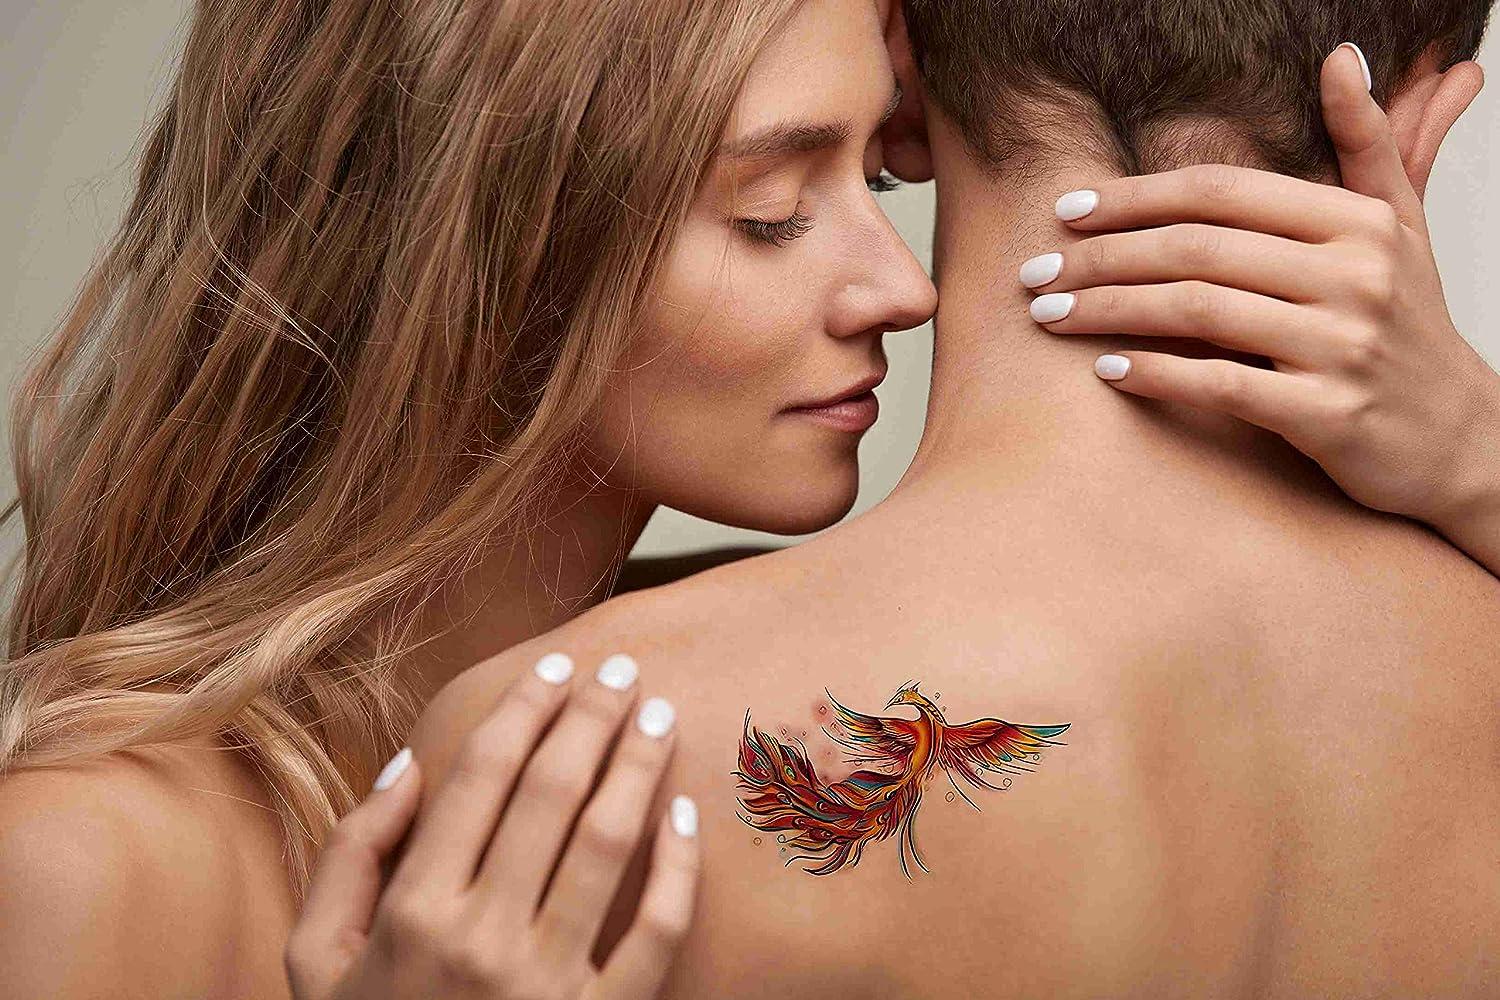 Amazing 'Flying Phoenix' tattoo appears to take flight